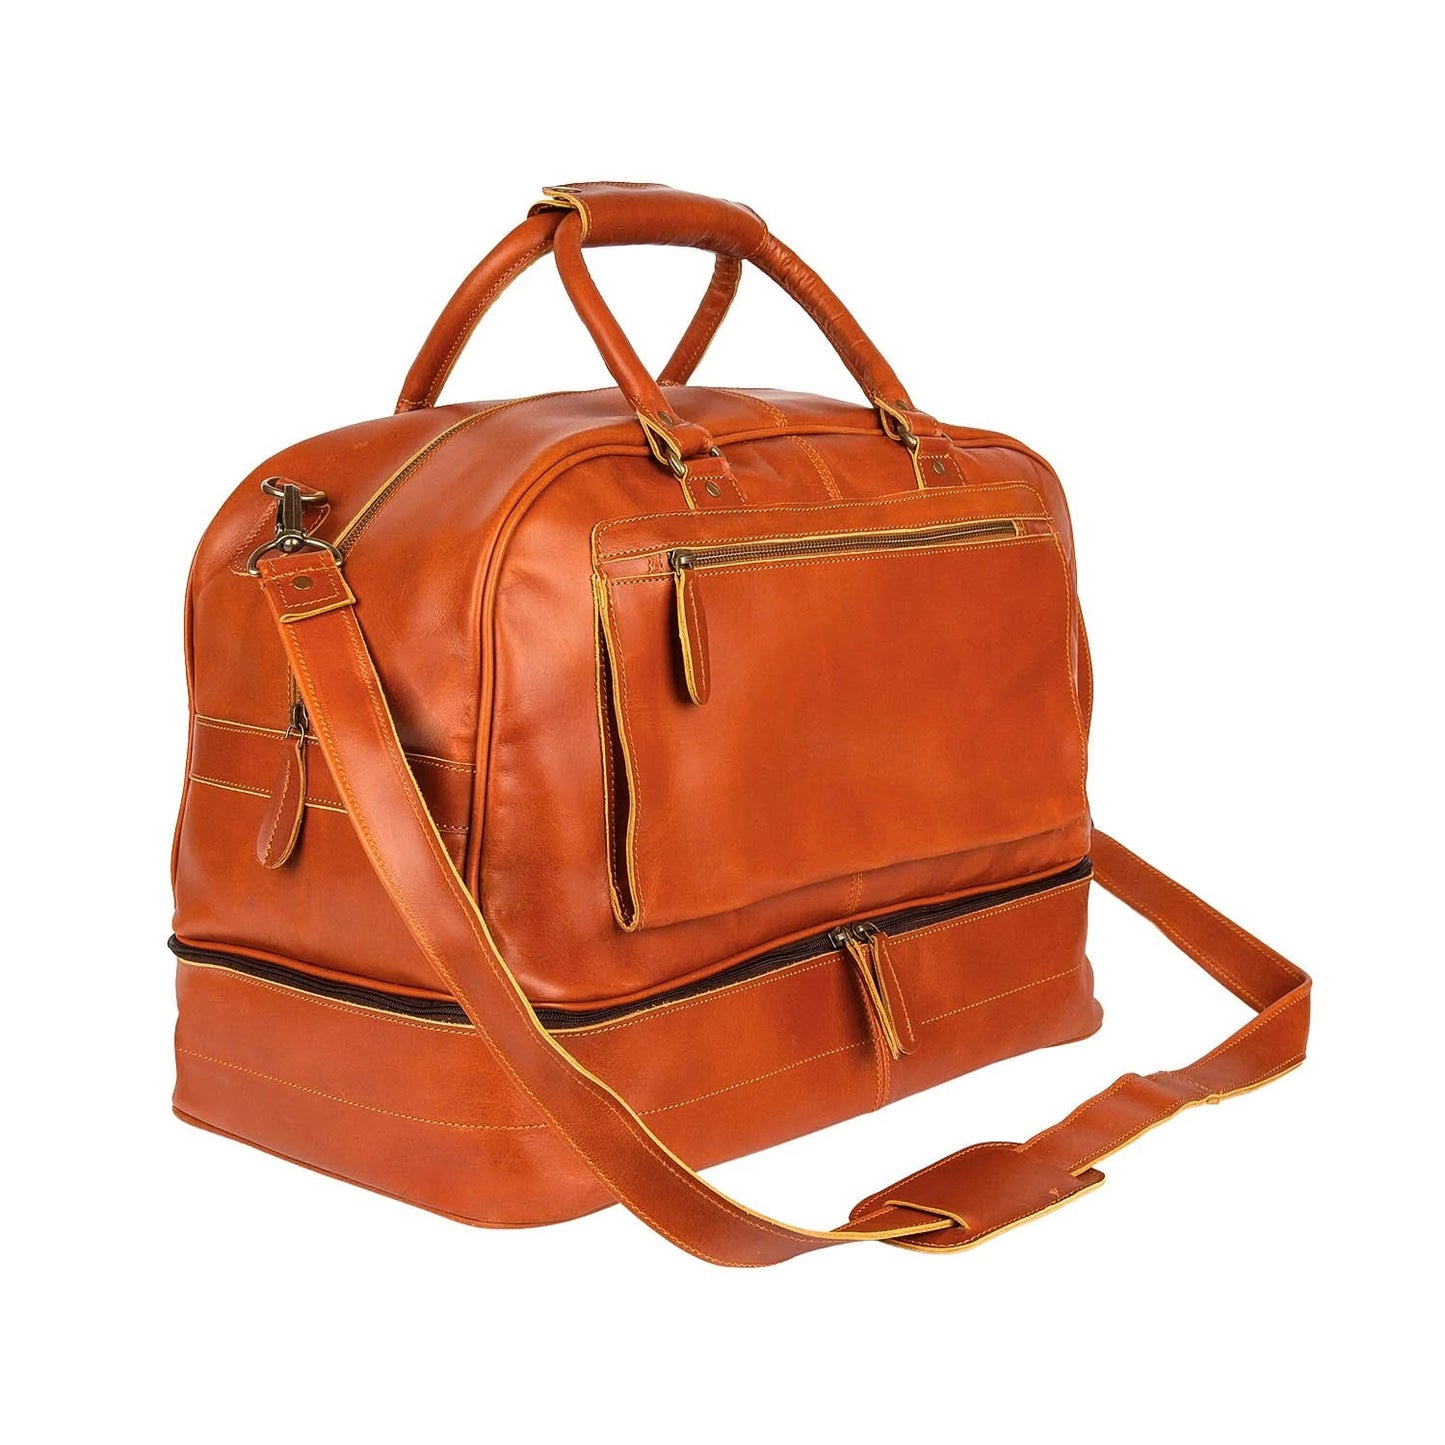 Personalized Full Grain Tan Leather Bag